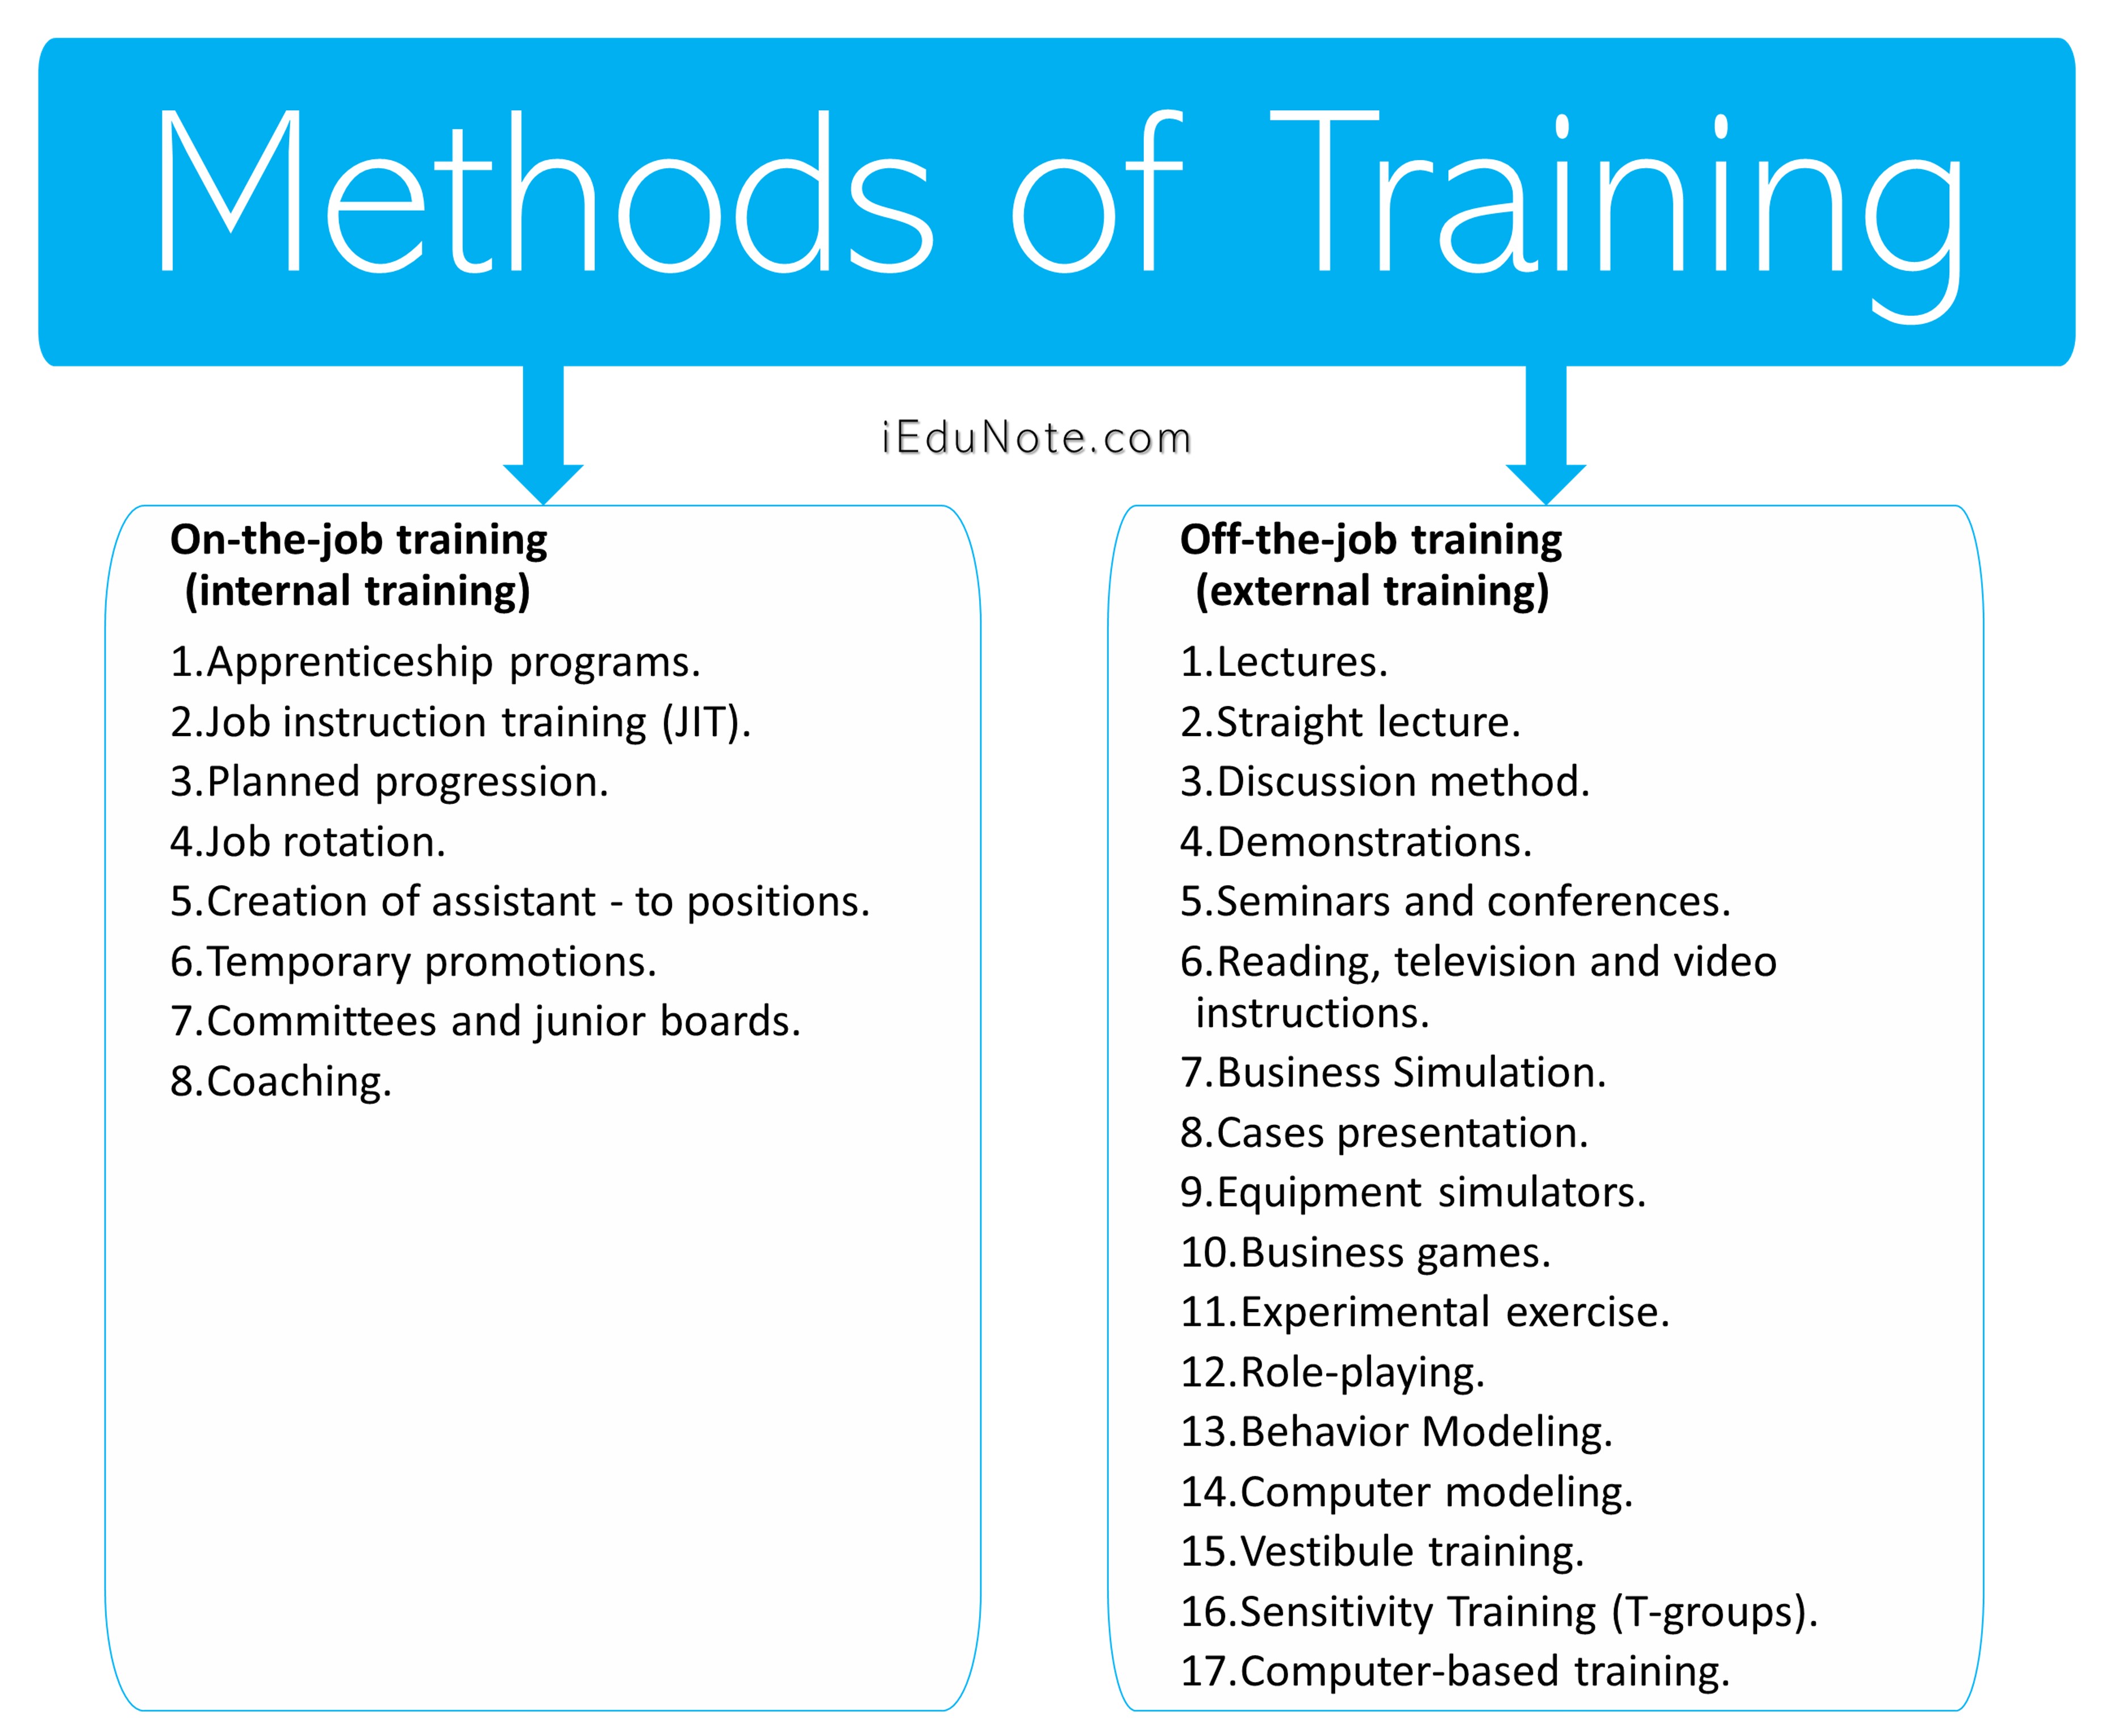 Training Methods: Coaching, Job rotations & Instructions, Conferences